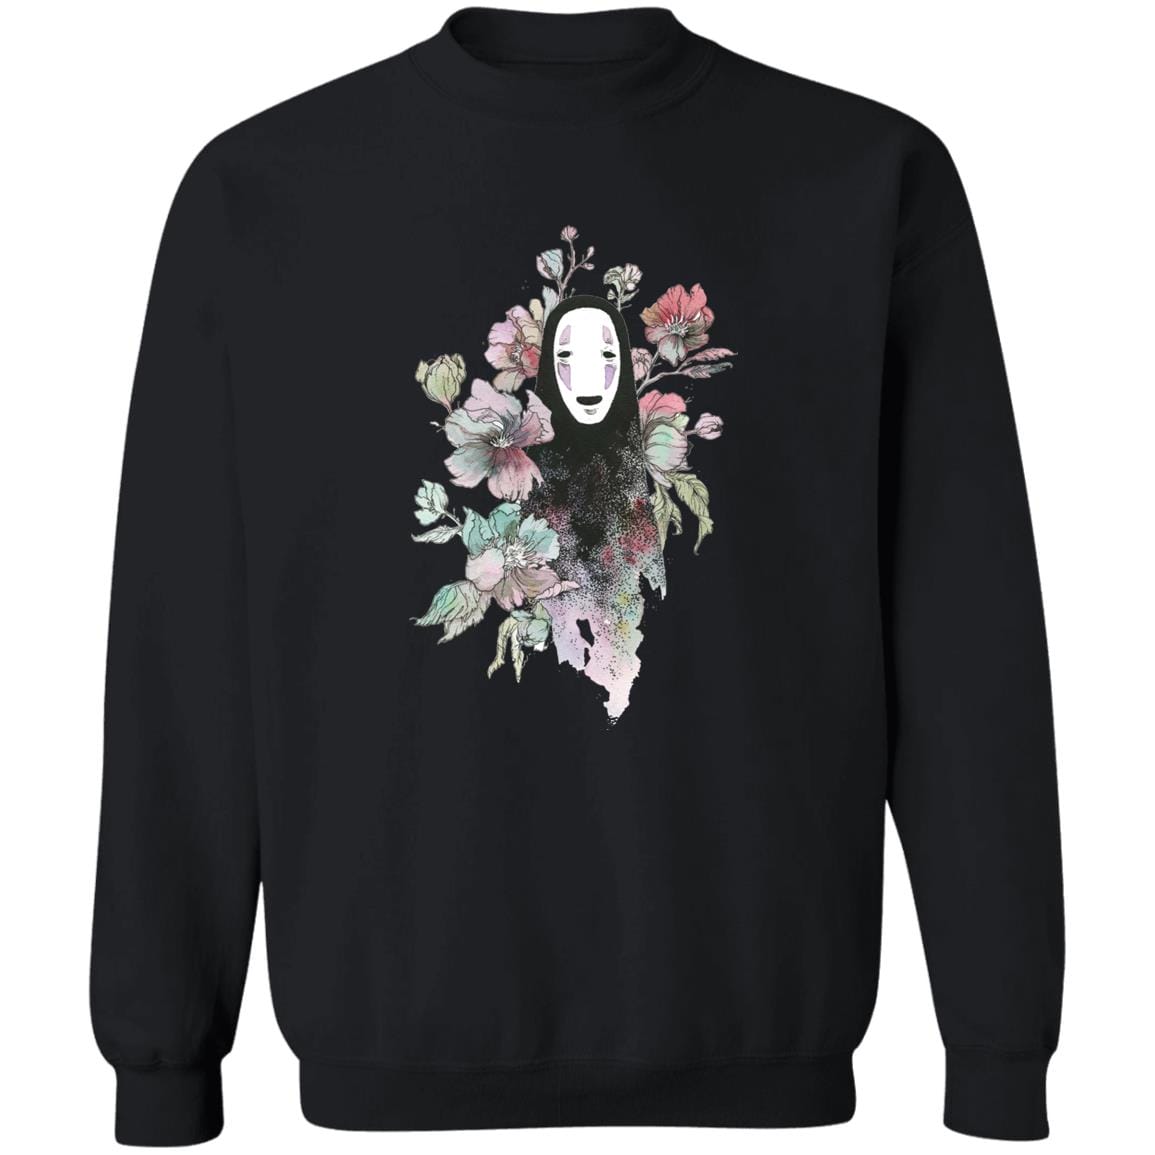 Spirited Away – Kaonashi by the Flowers Sweatshirt